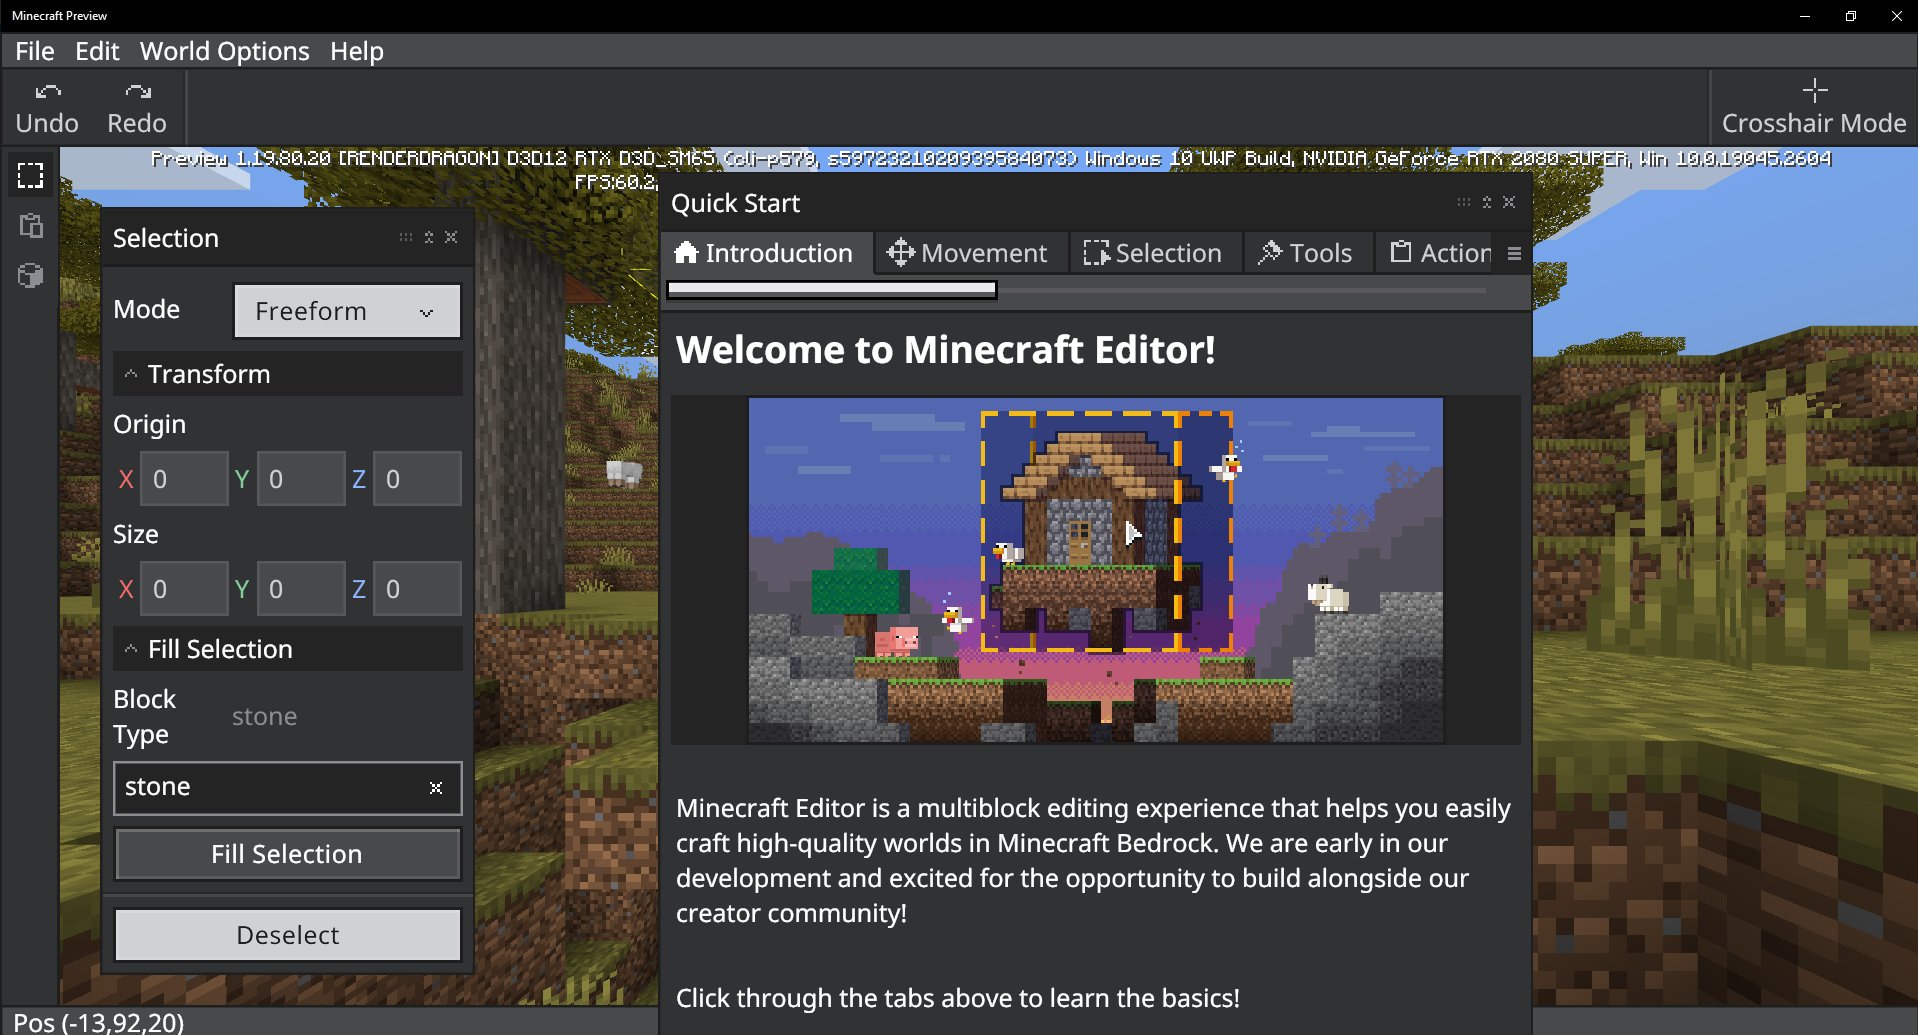 Minecraft Bedrock Editor Overview